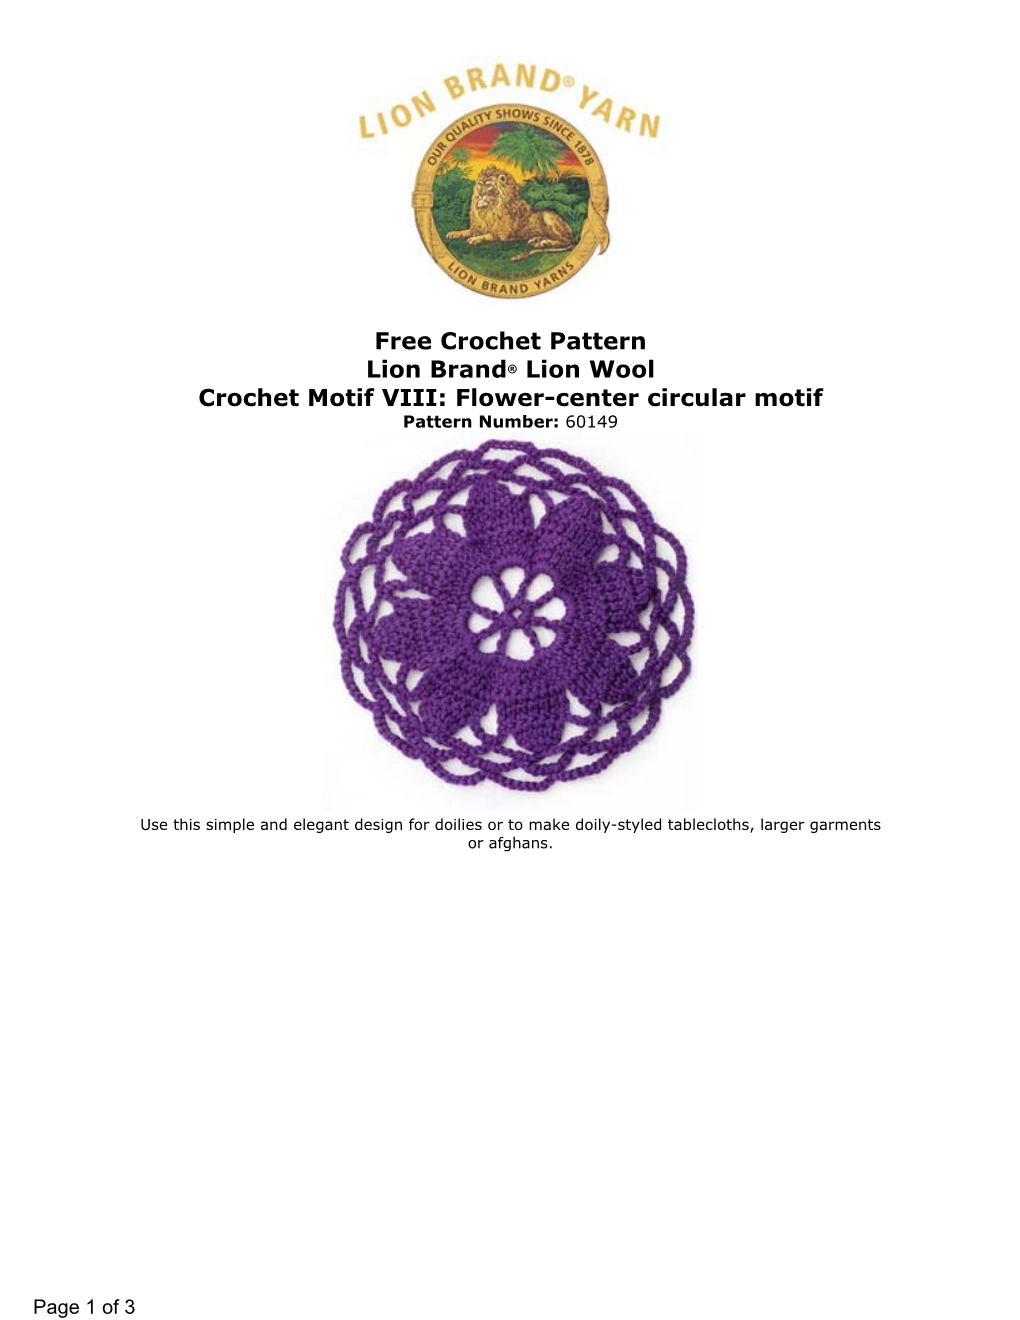 Free Crochet Pattern Lion Brand® Lion Wool Crochet Motif VIII: Flower-Center Circular Motif Pattern Number: 60149